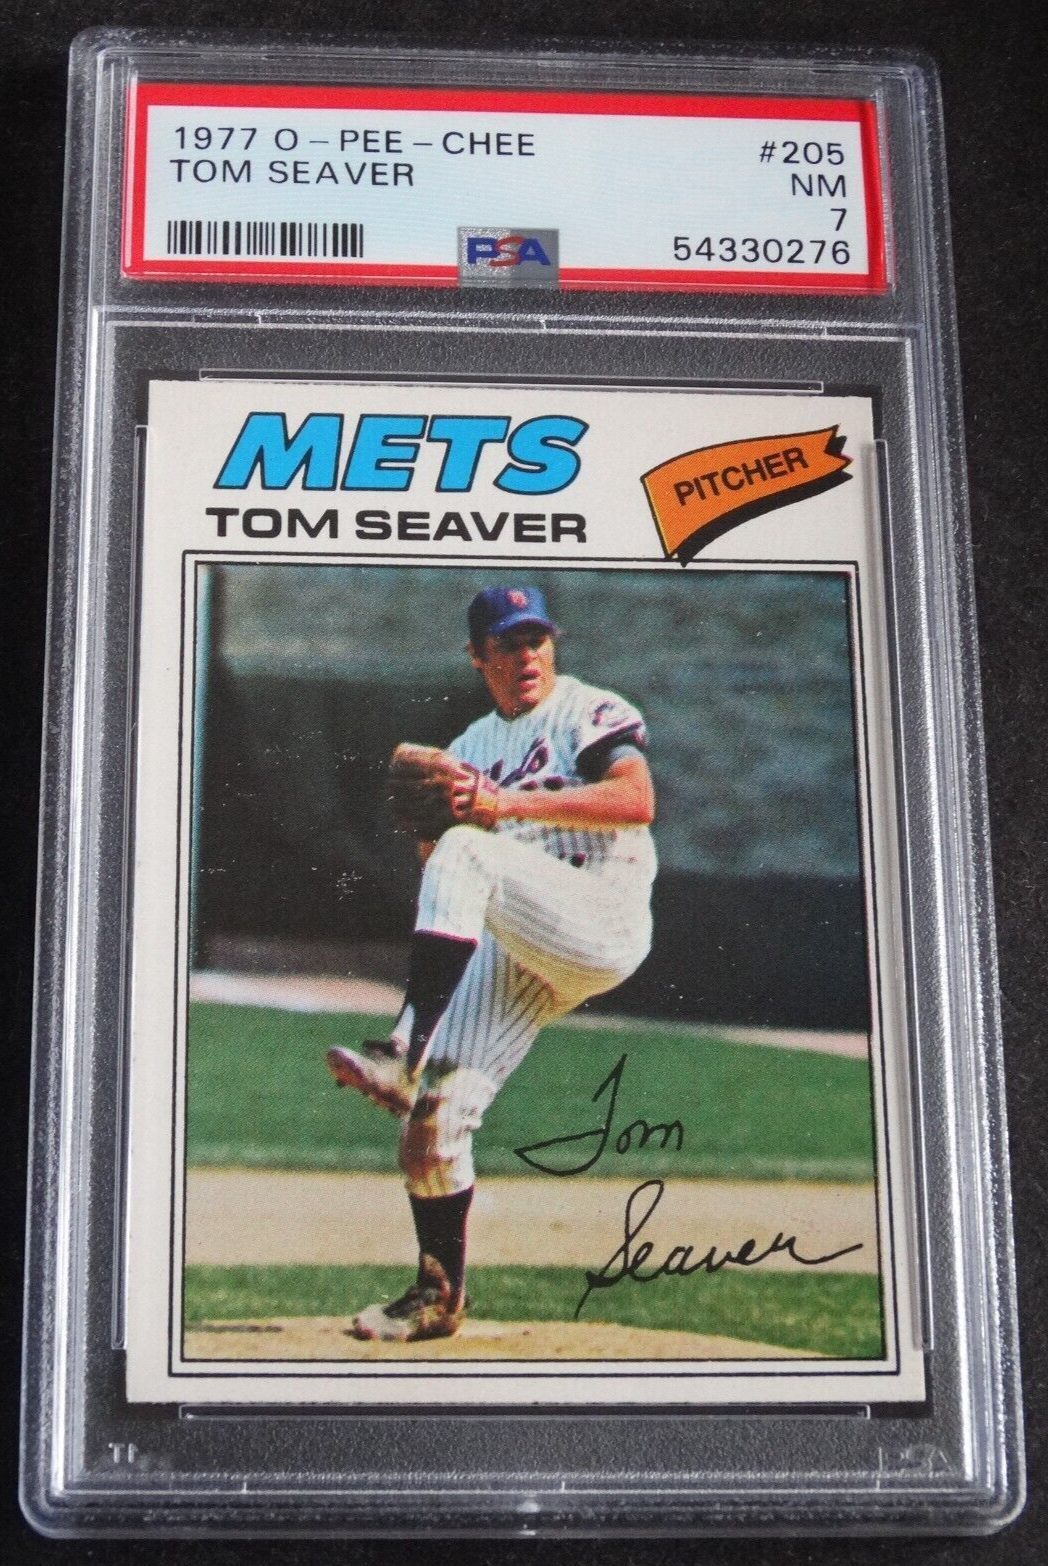 Primary image for 1977 O-Pee-Chee OPC #205 Tom Seaver New York Mets Baseball Card PSA 7 Near Mint